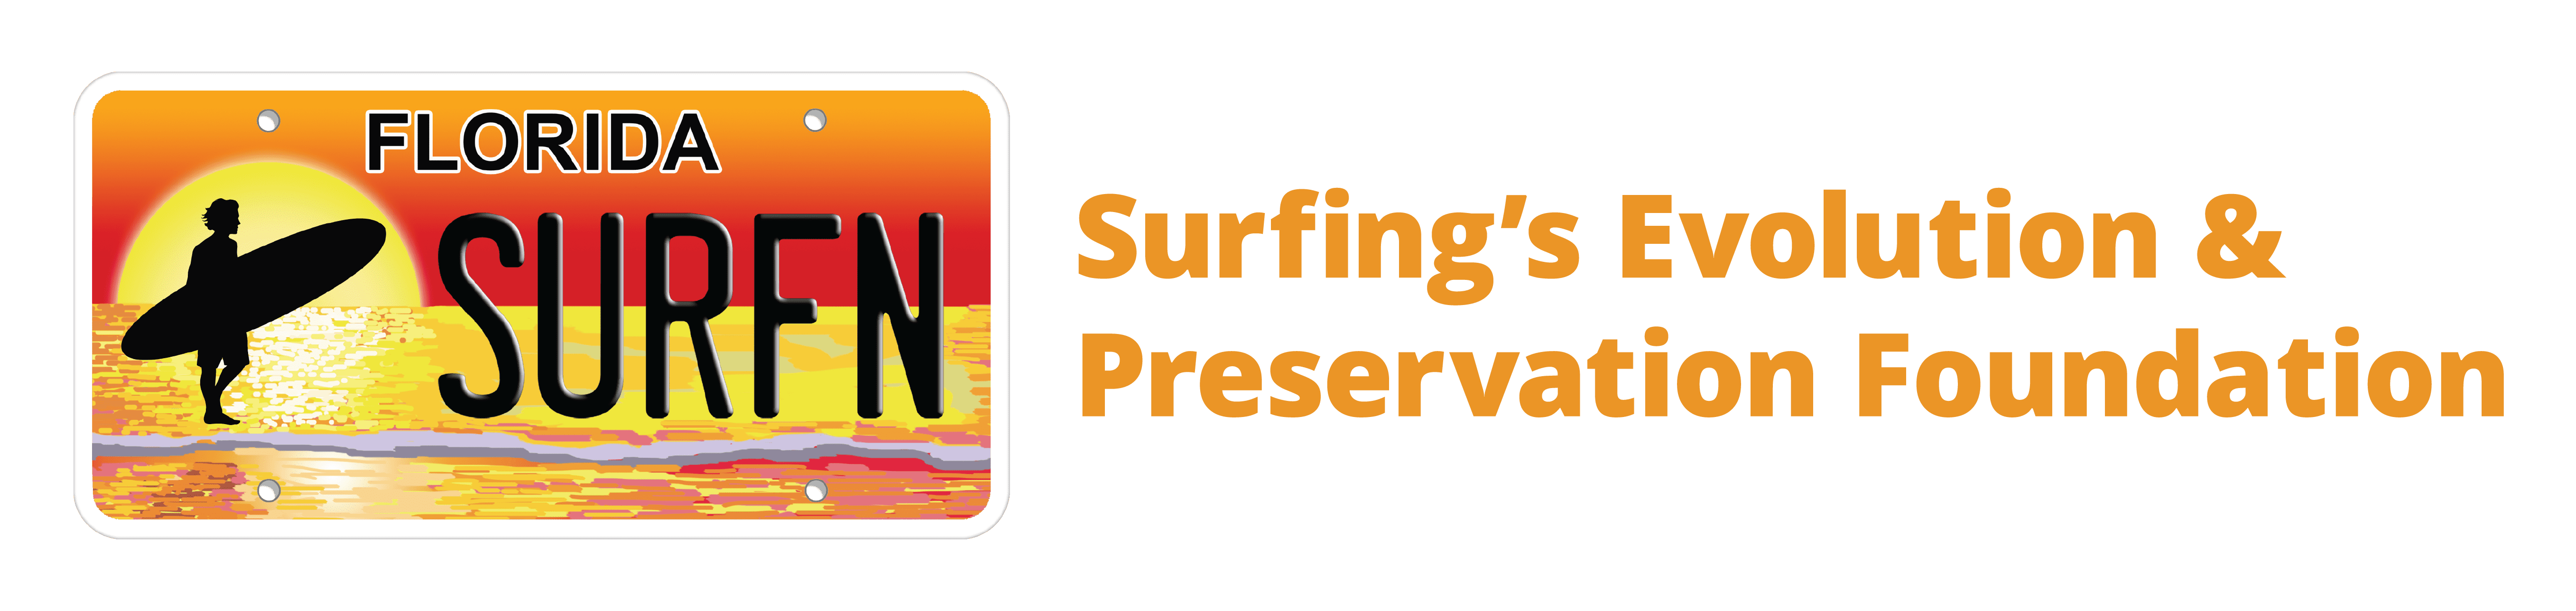 Preserve Surfing Beaches